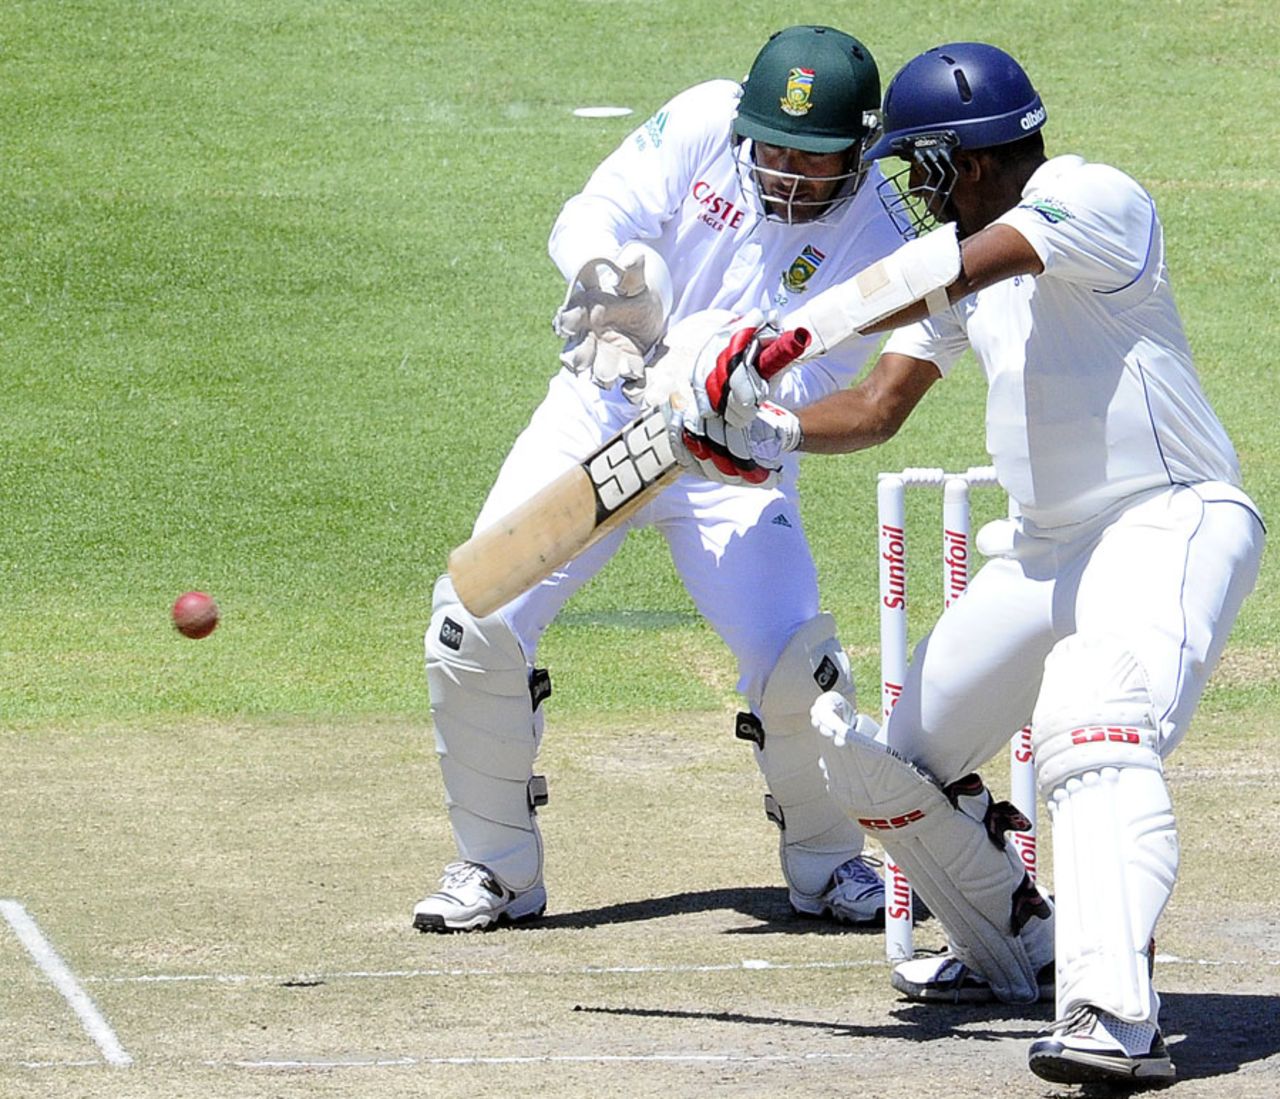 Thilan Samaraweera cuts Imran Tahir through the off side, South Africa v Sri Lanka, 3rd Test, Cape Town, 4th day, January 6, 2012